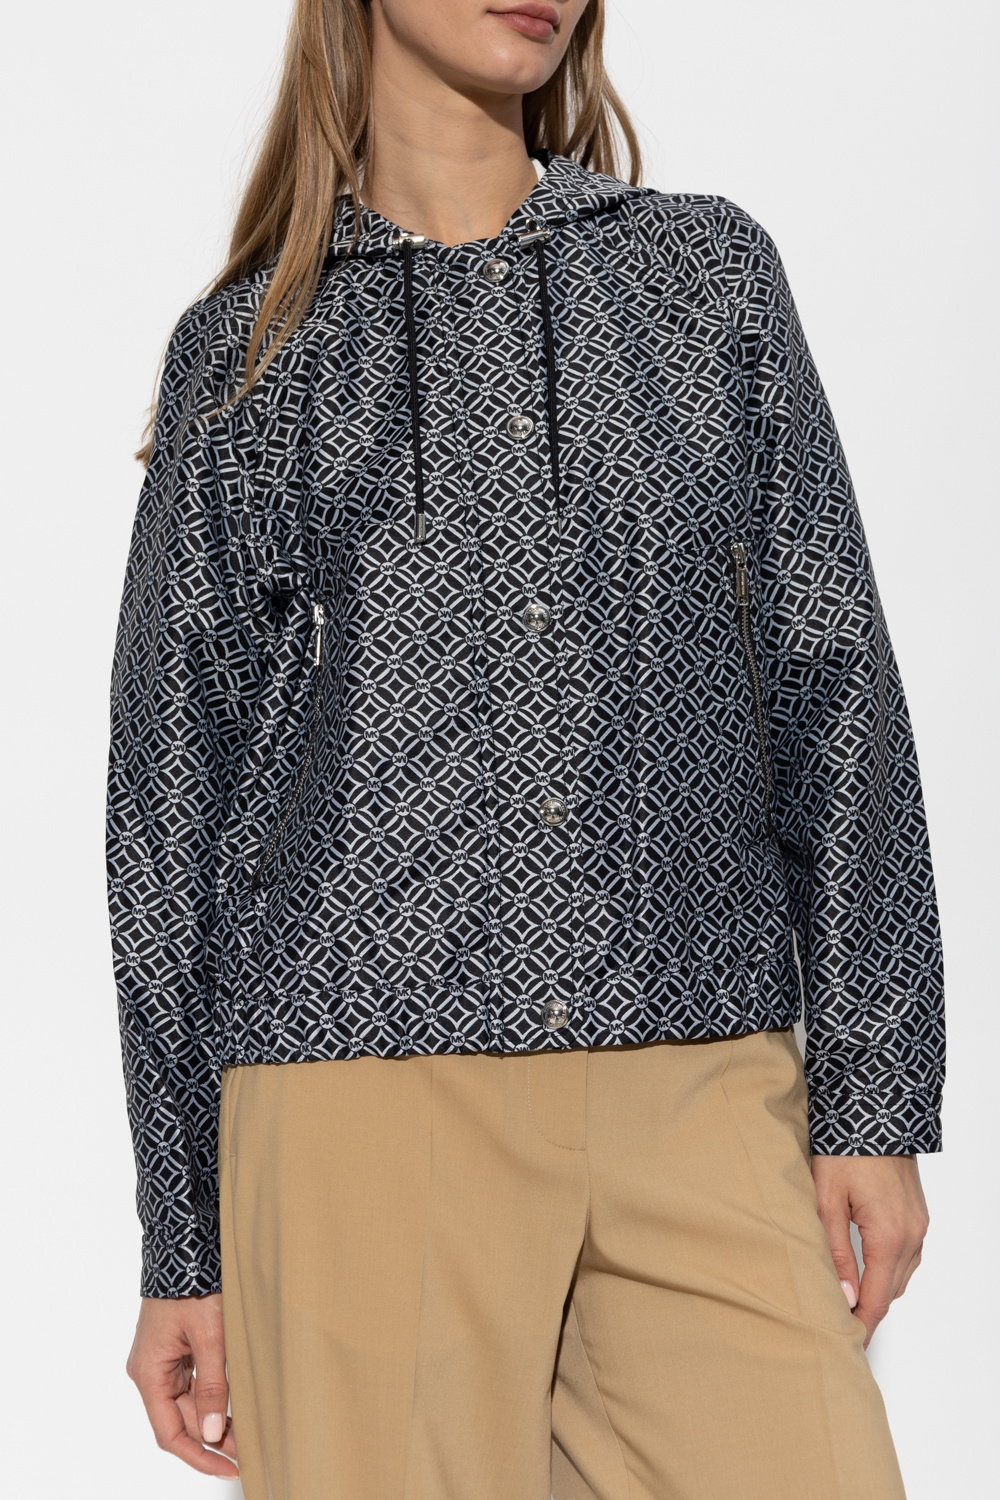 Michael Michael Kors Jacket with monogram, Women's Clothing